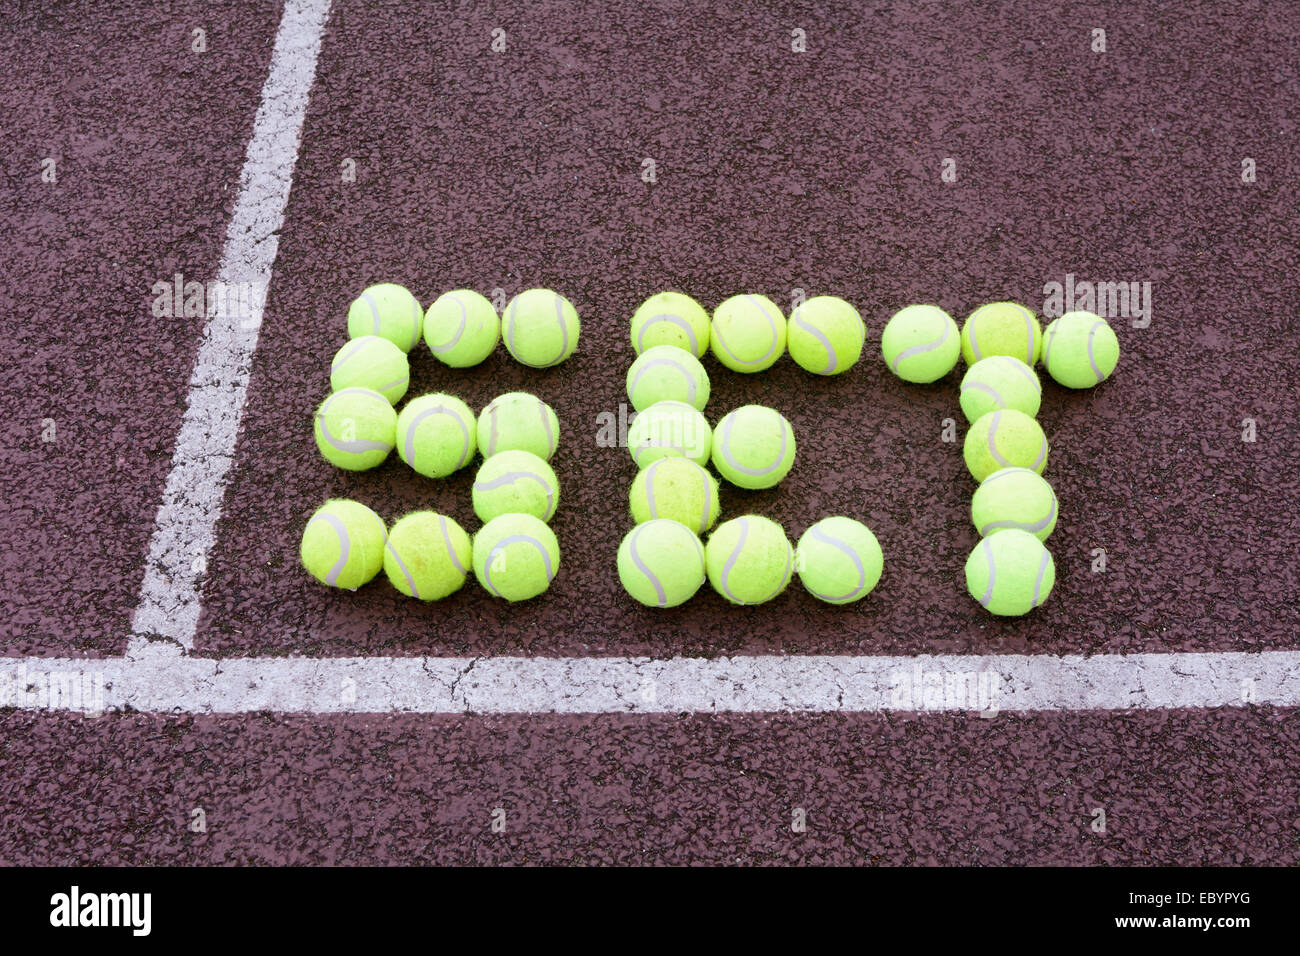 Tennis set made from tennis balls on hard court Stock Photo